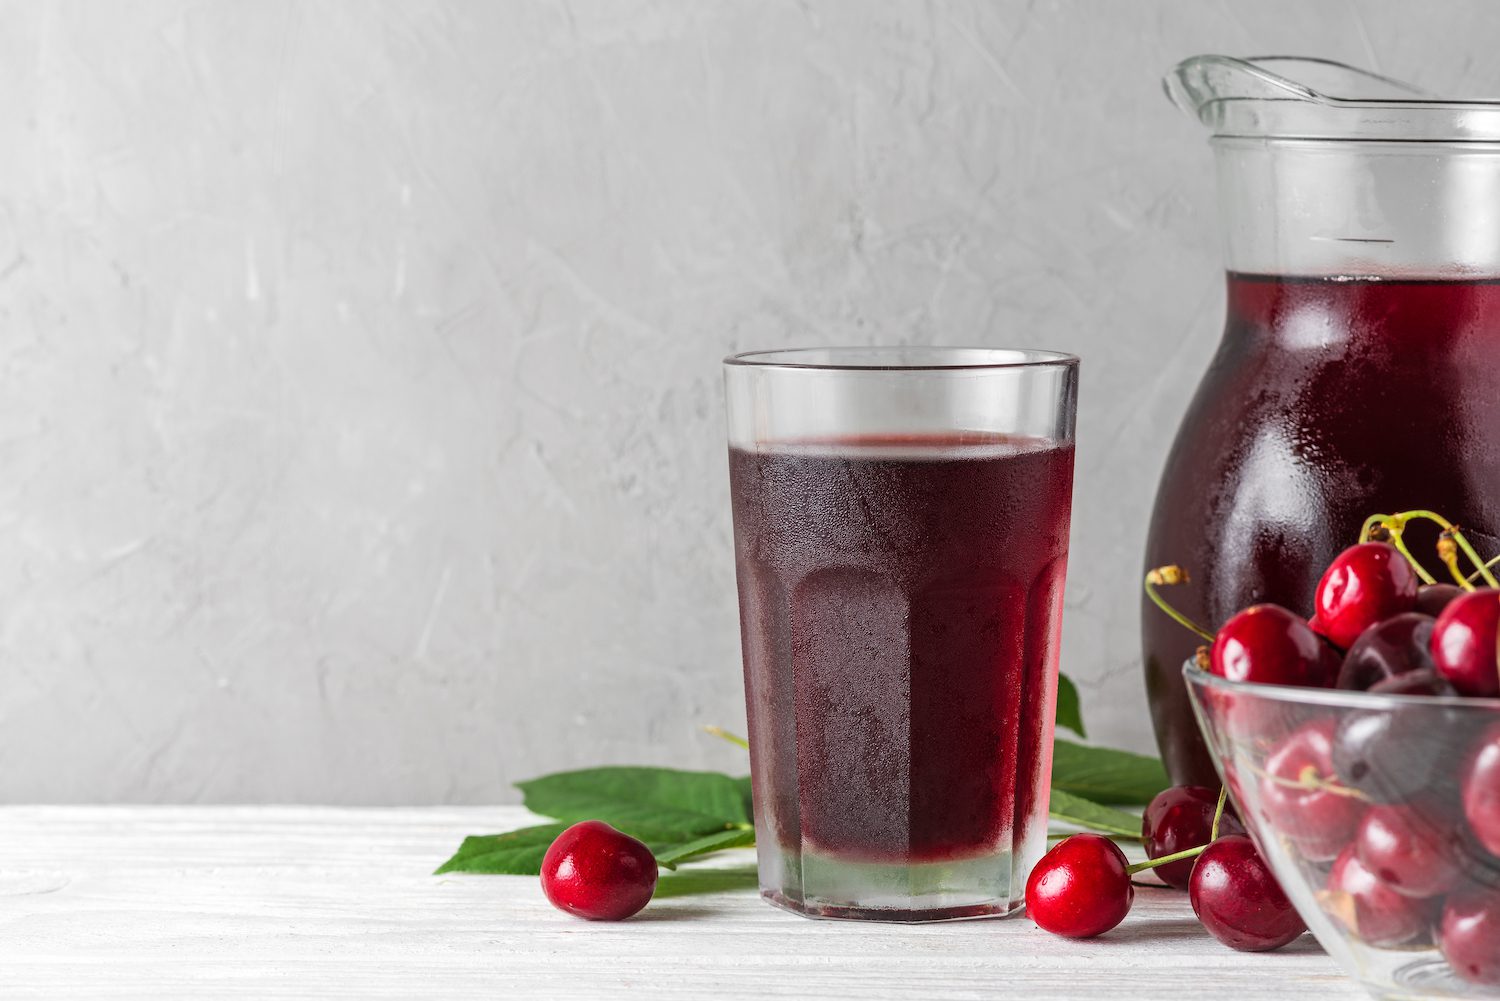 Sleep Benefits of Tart Cherry Juice